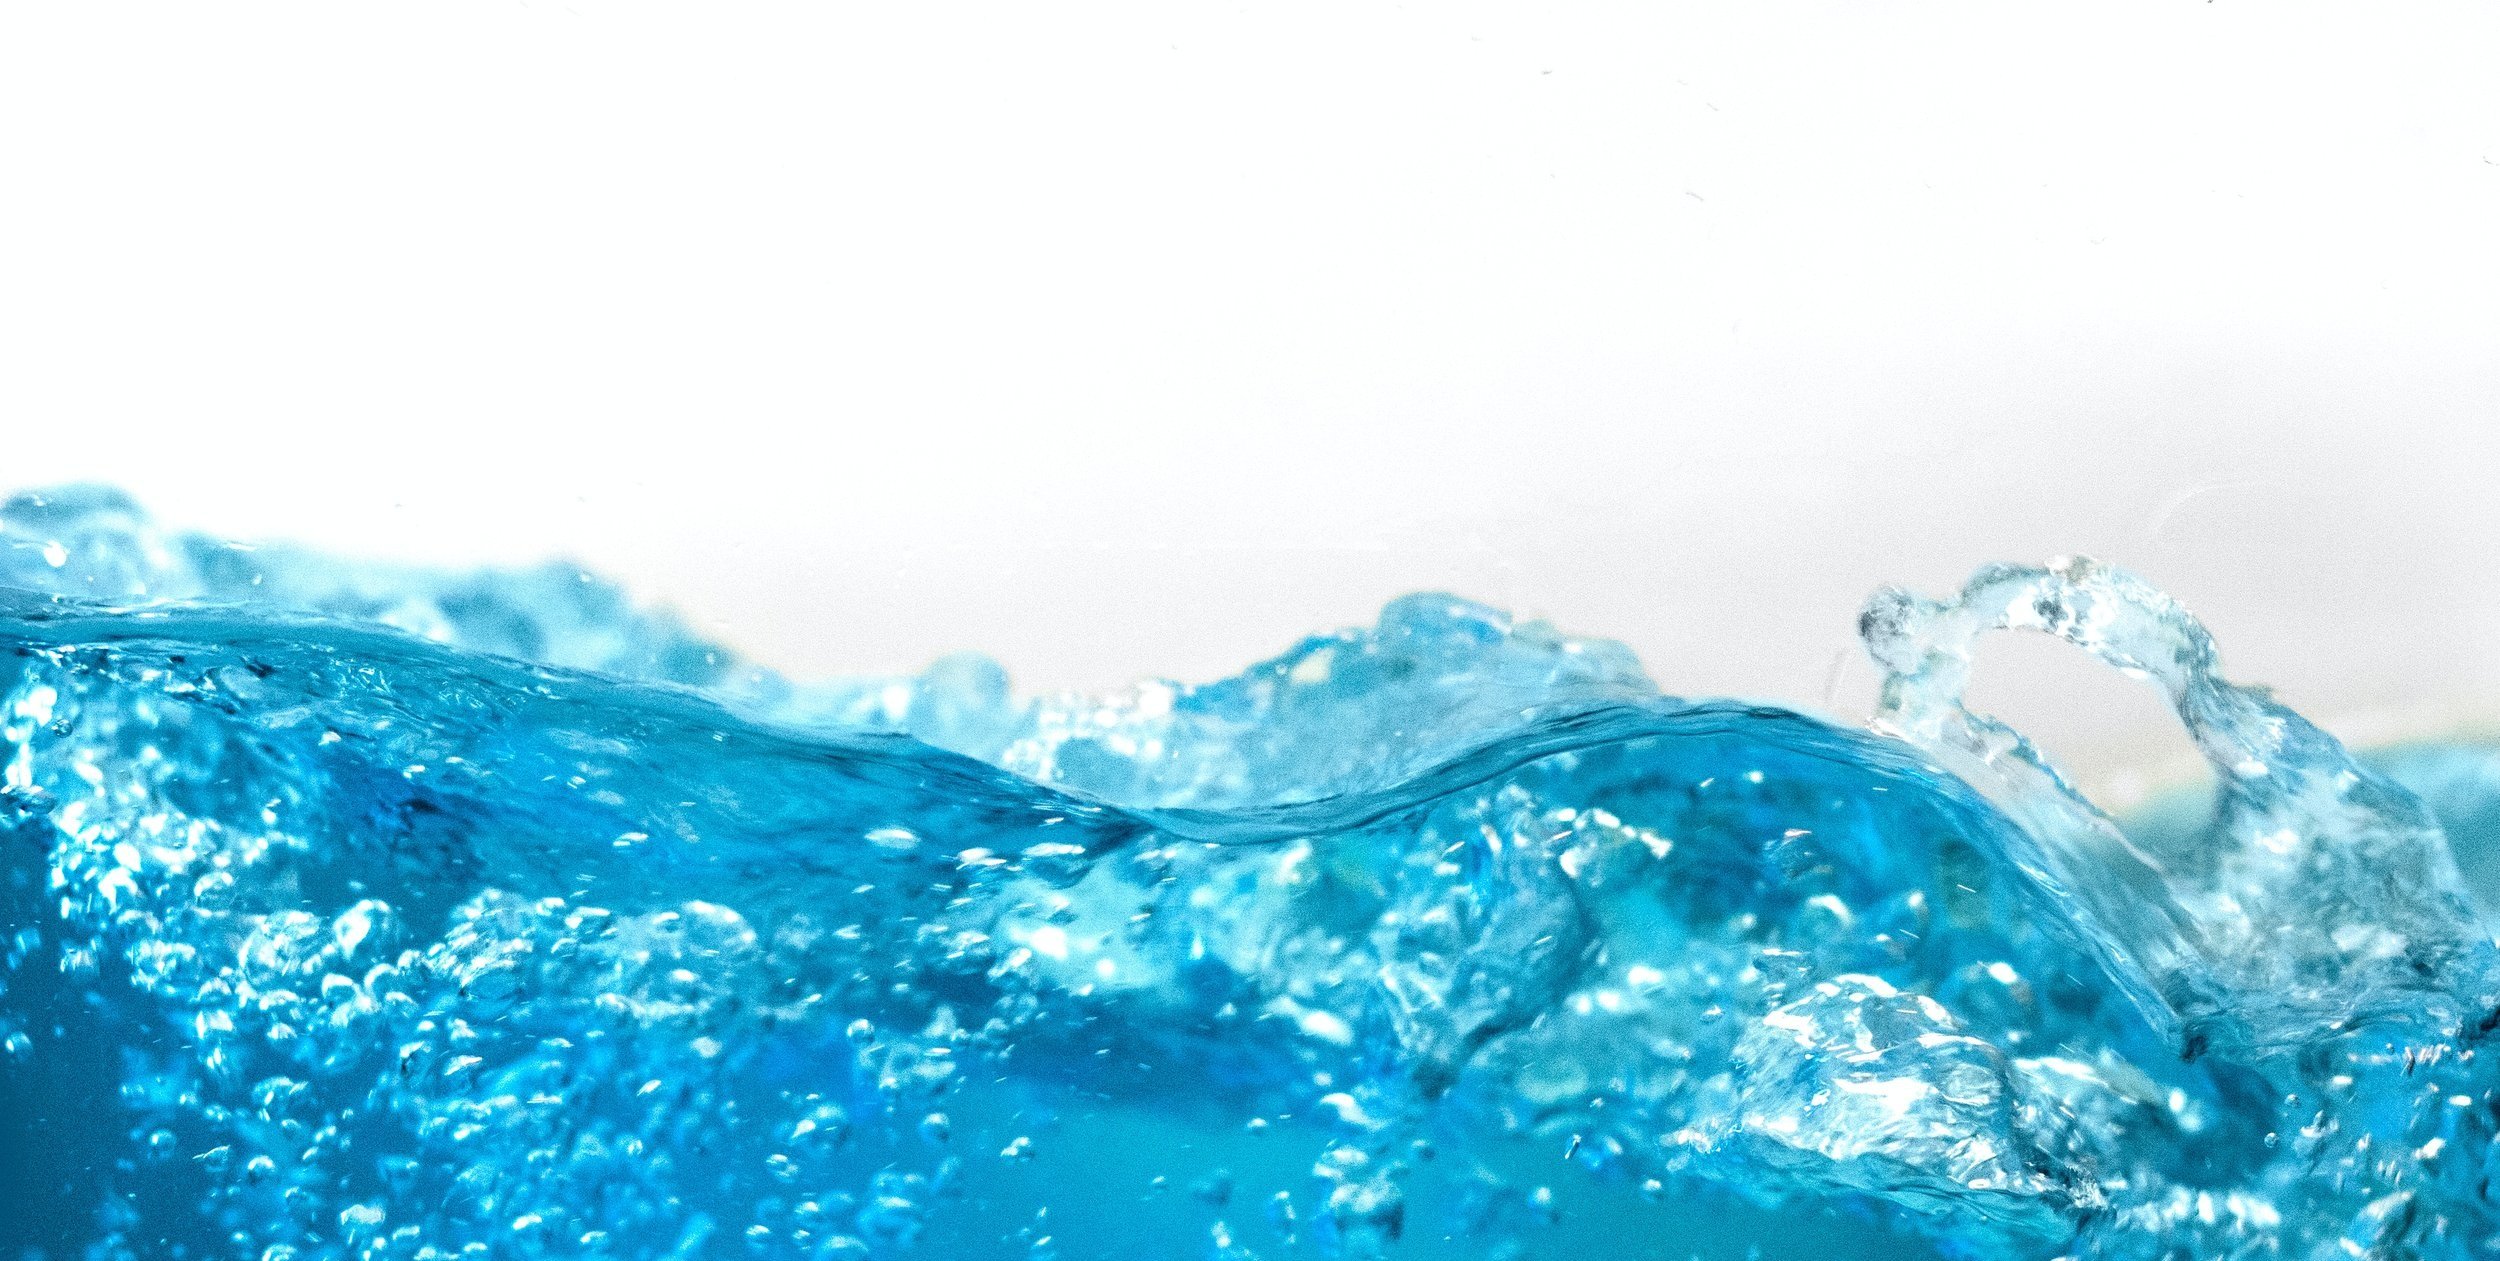 Pani Clean Welcomes Joe Zuback, Expert in Water Technology, to Board of Directors